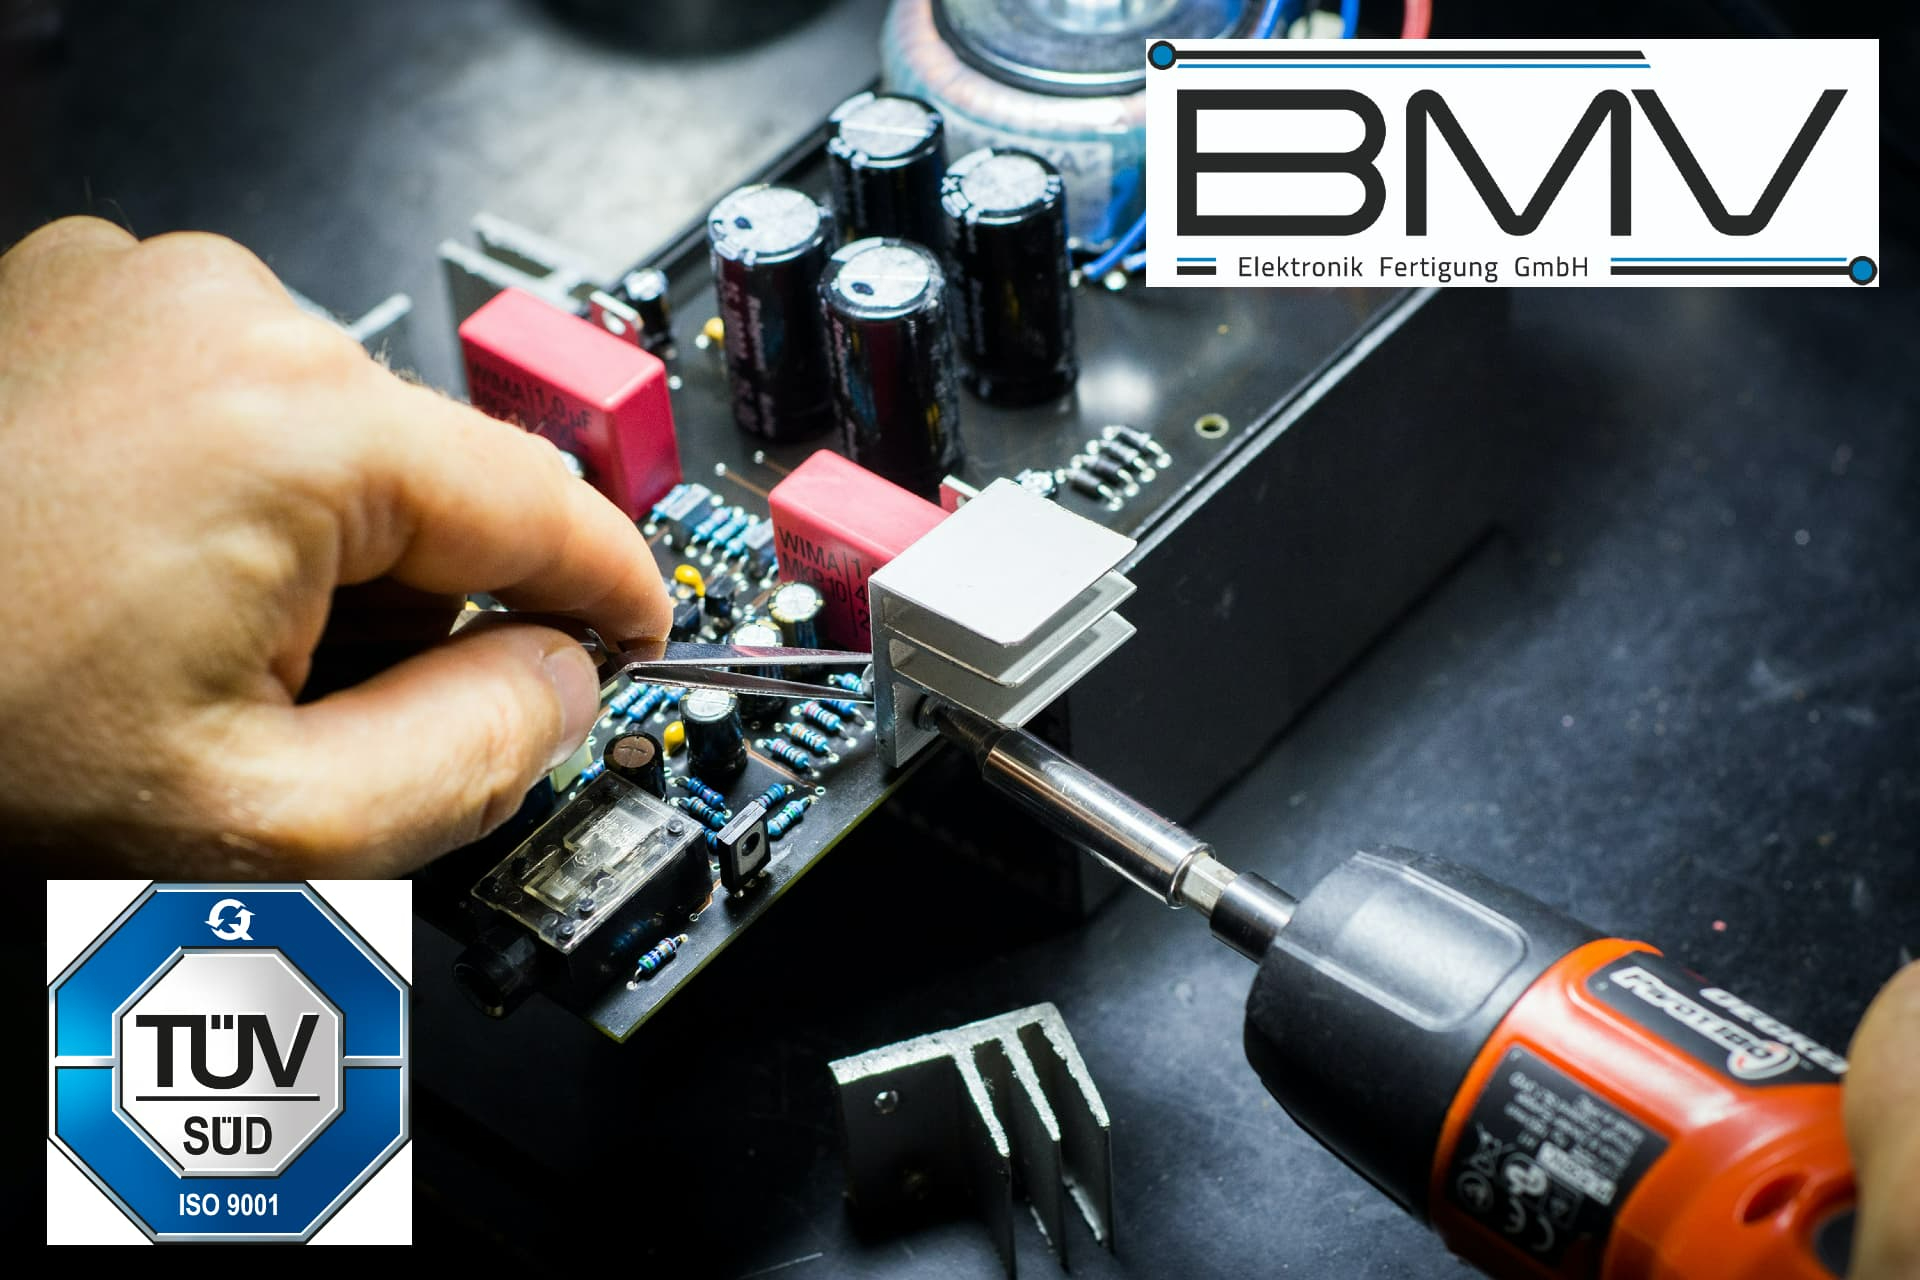 Cooperation at eye level – BMV Elektronik Fertigung GmbH